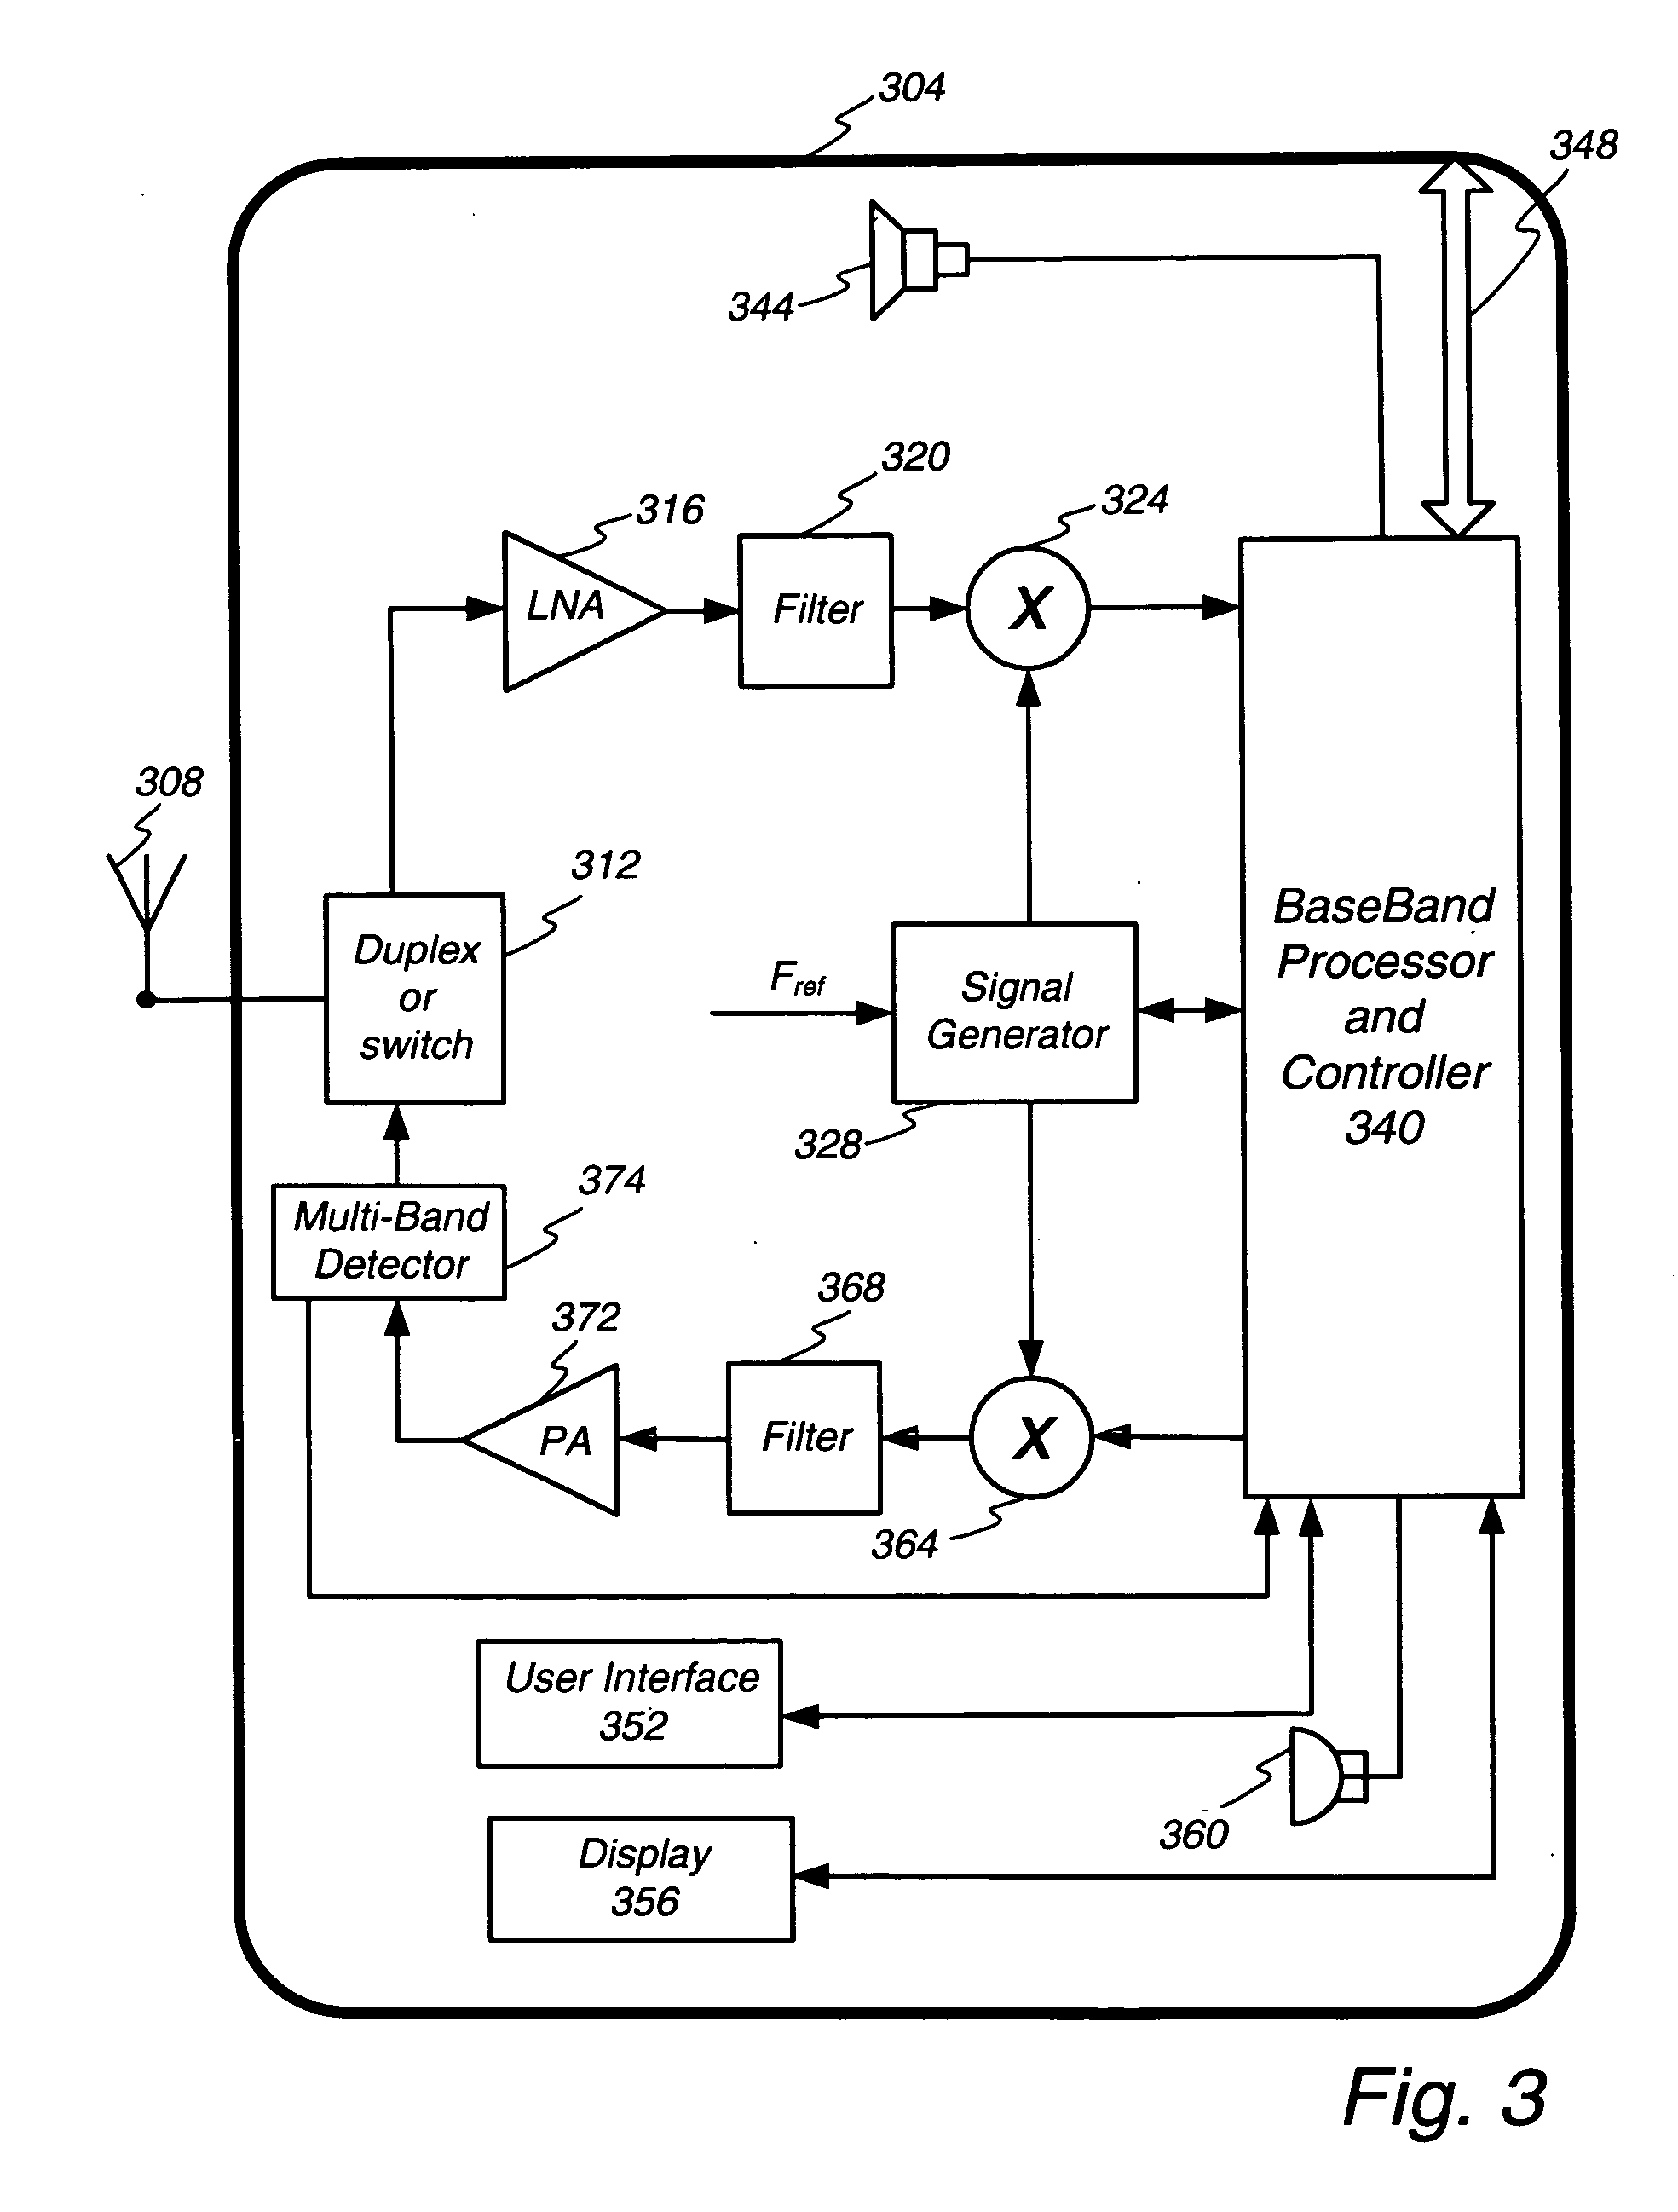 Temperature compensation of collector-voltage control RF amplifiers